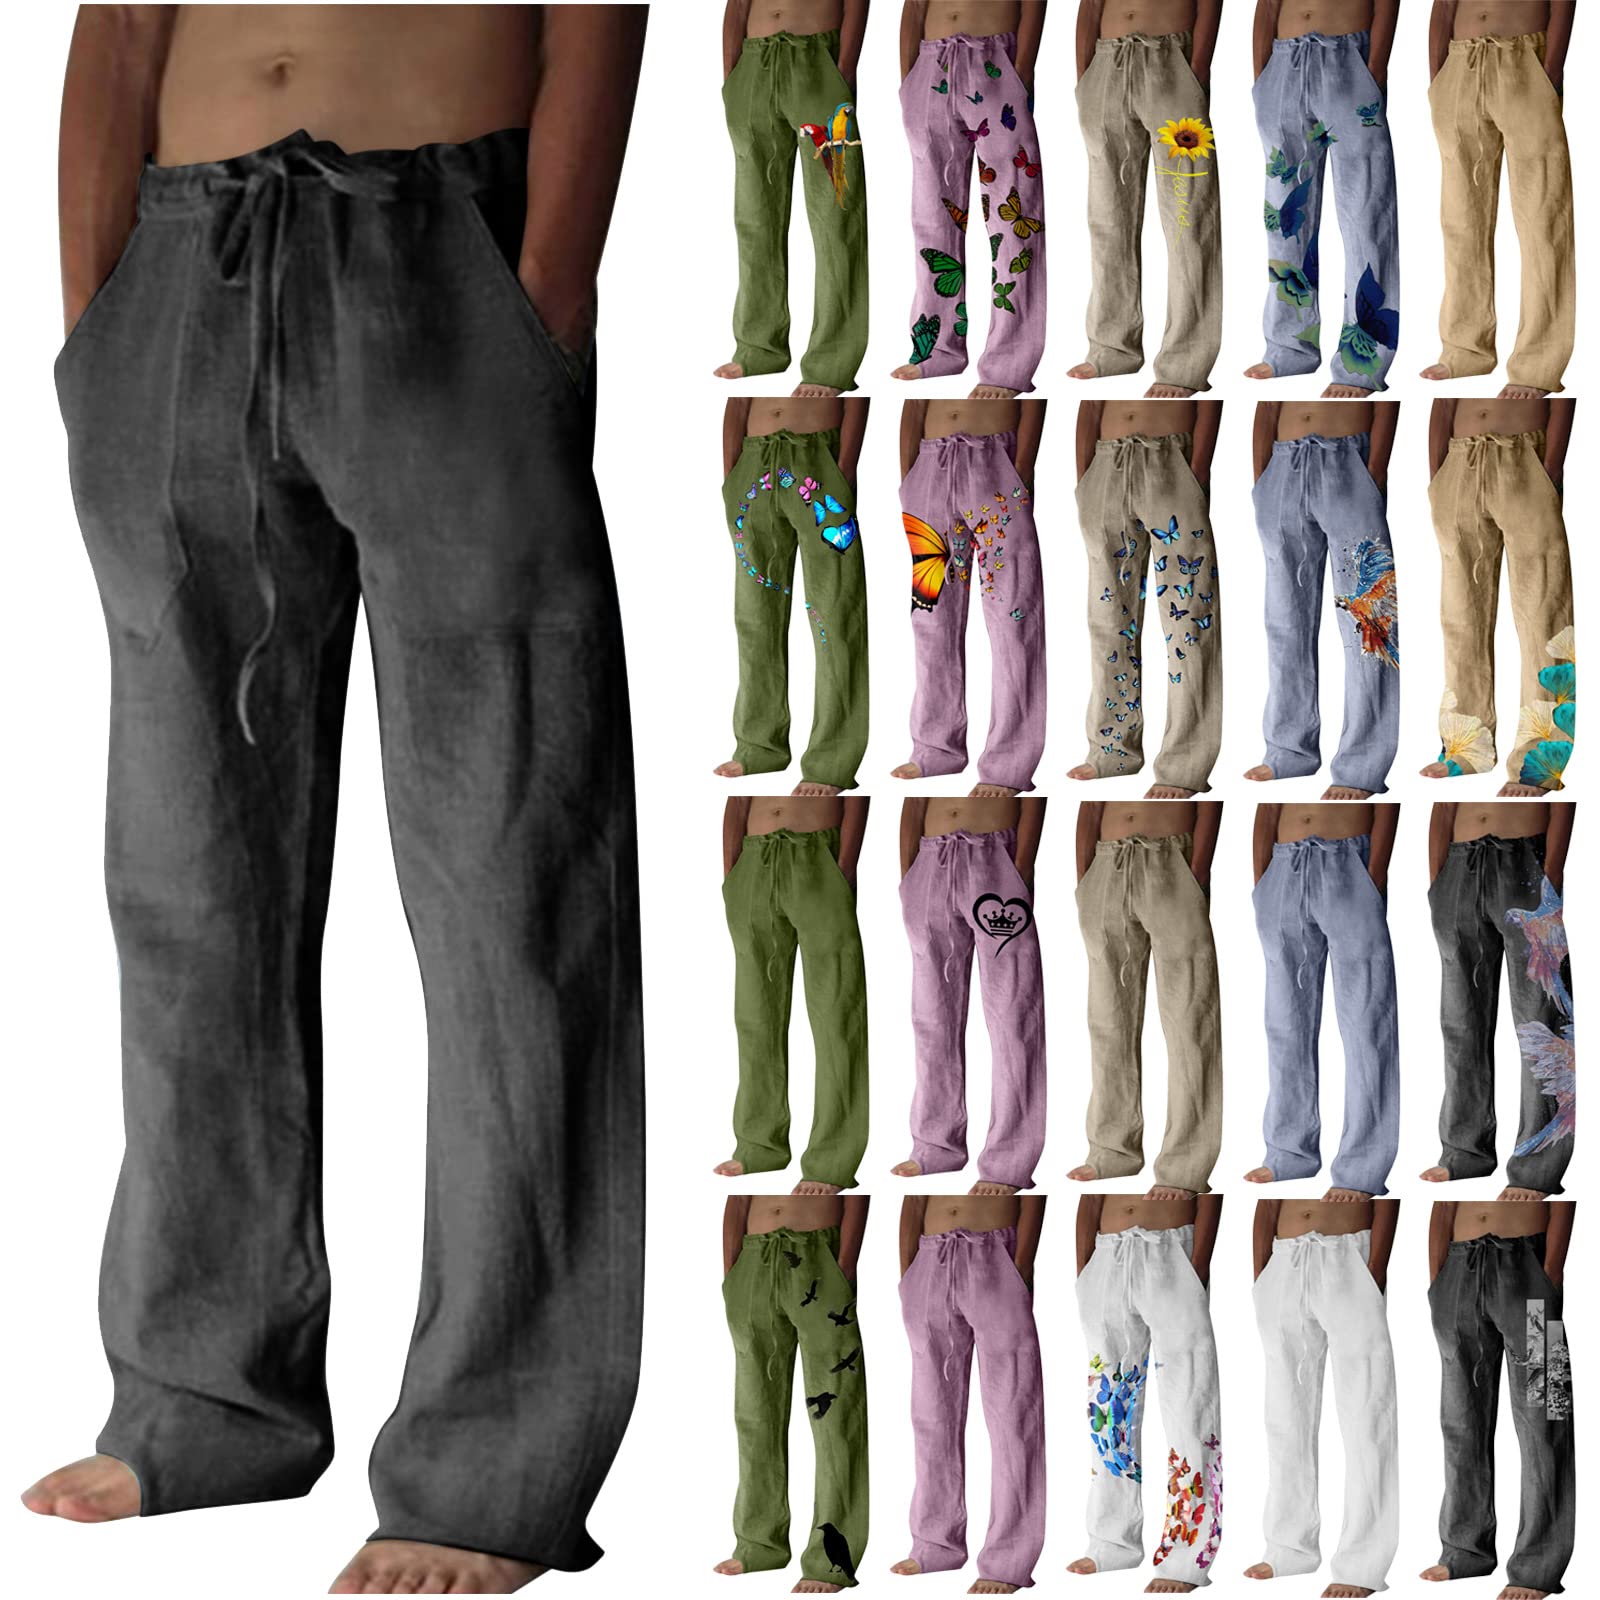 Dgoopd Men's Cotton Linen Pants Casual Elastic Waist Drawstring Pants  Straight Leg Yoga Pants Lightweight Summer